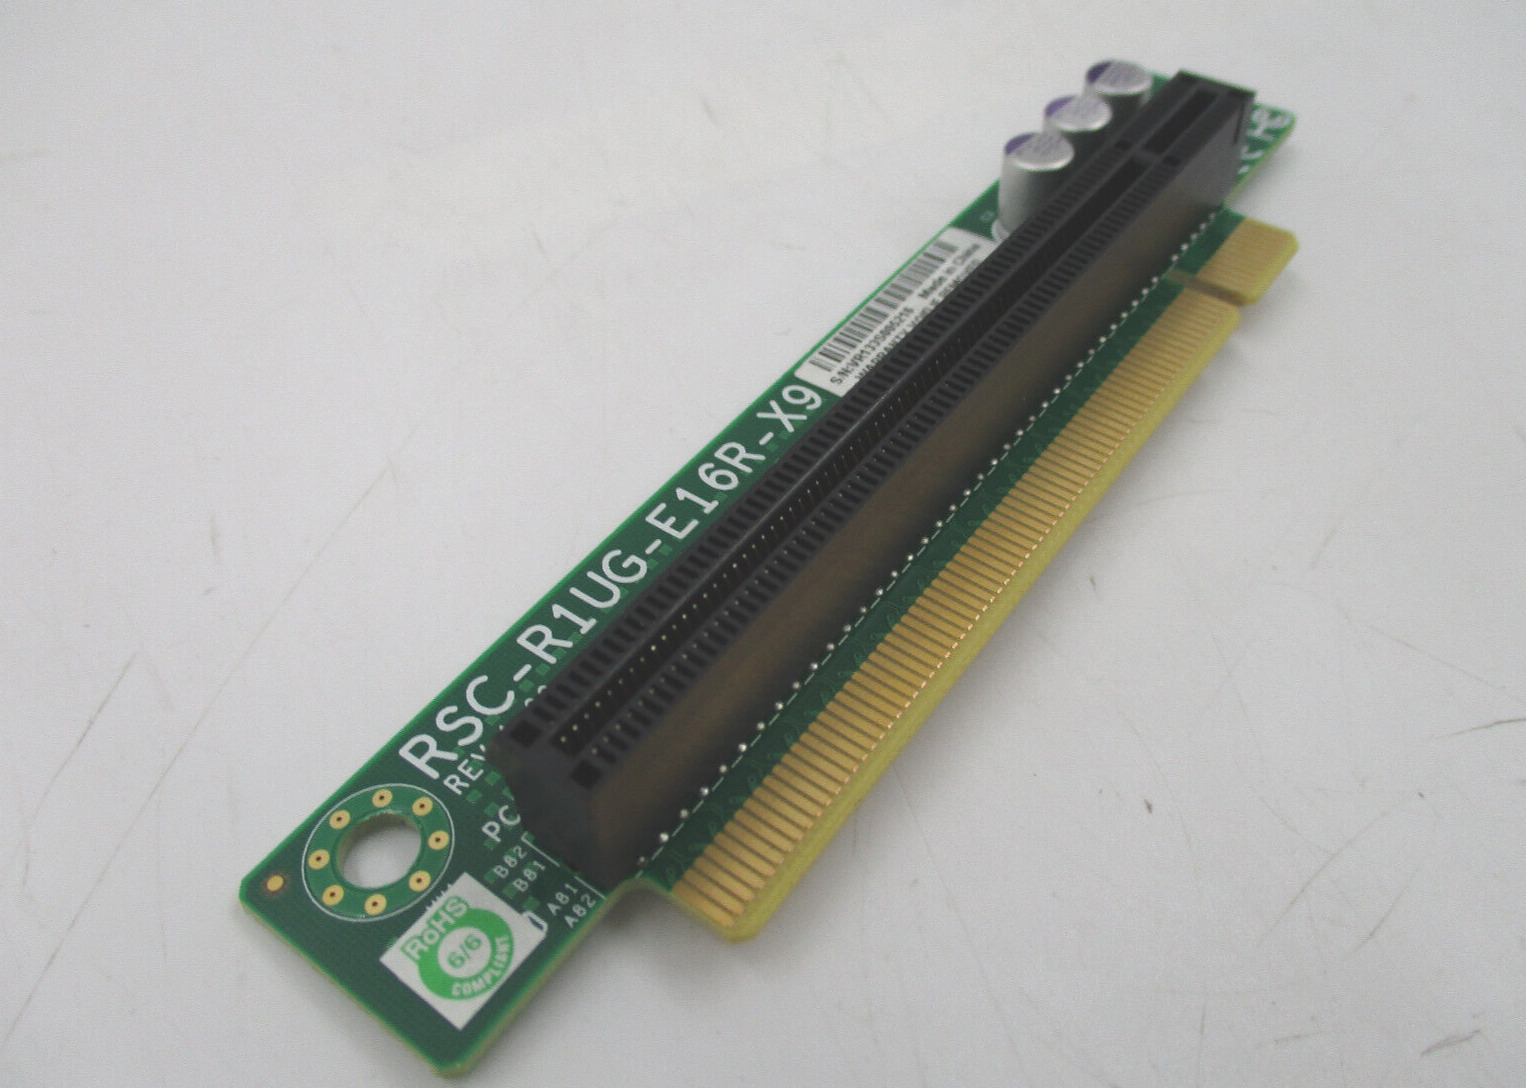 Supermicro RSC-R1UG-E16R-X9 1U Passive PCIe x16 Riser Card Tested Working